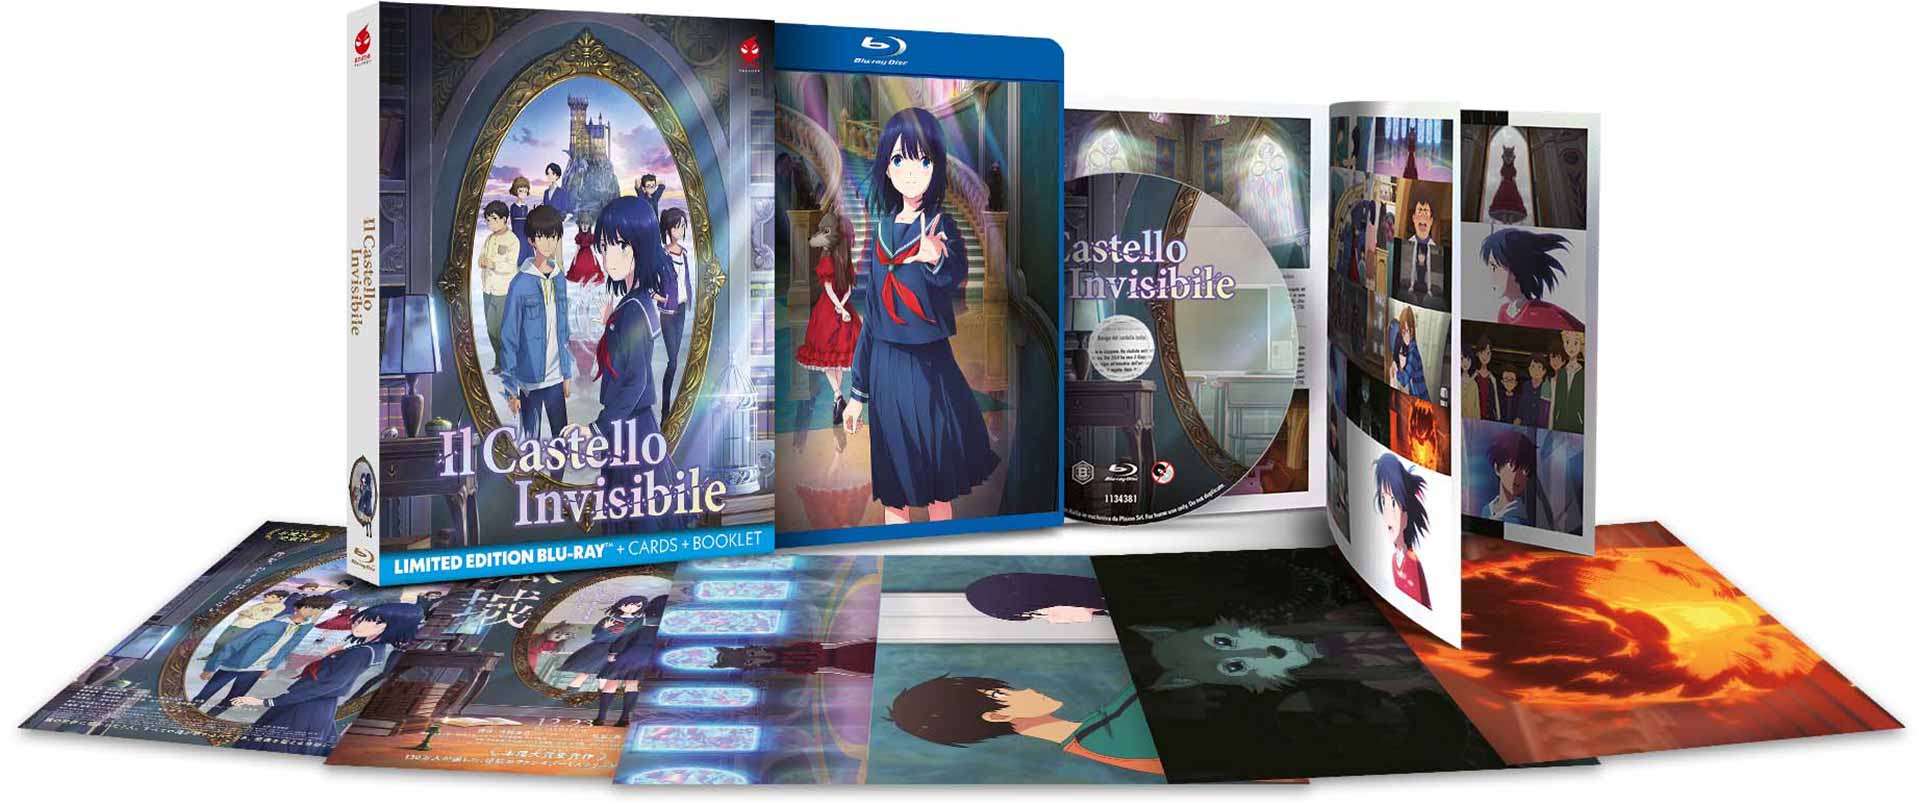 Il Castello Invisibile - Limited Edition Blu-ray + Cards + Booklet (Blu-ray) Image 2